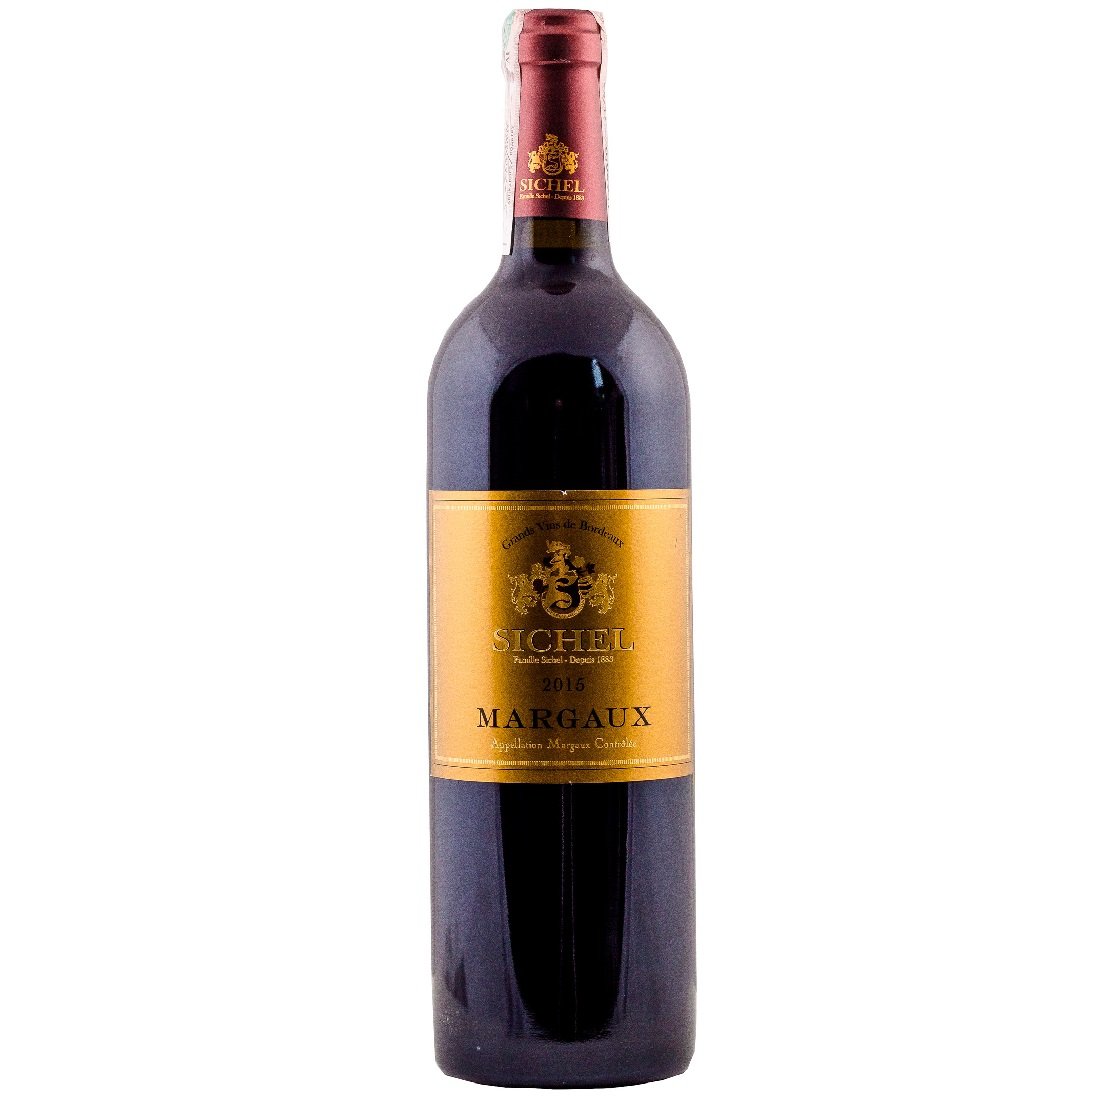 Вино Sichel Margaux 2015 AOC, красное, сухое, 0,75 л - фото 1